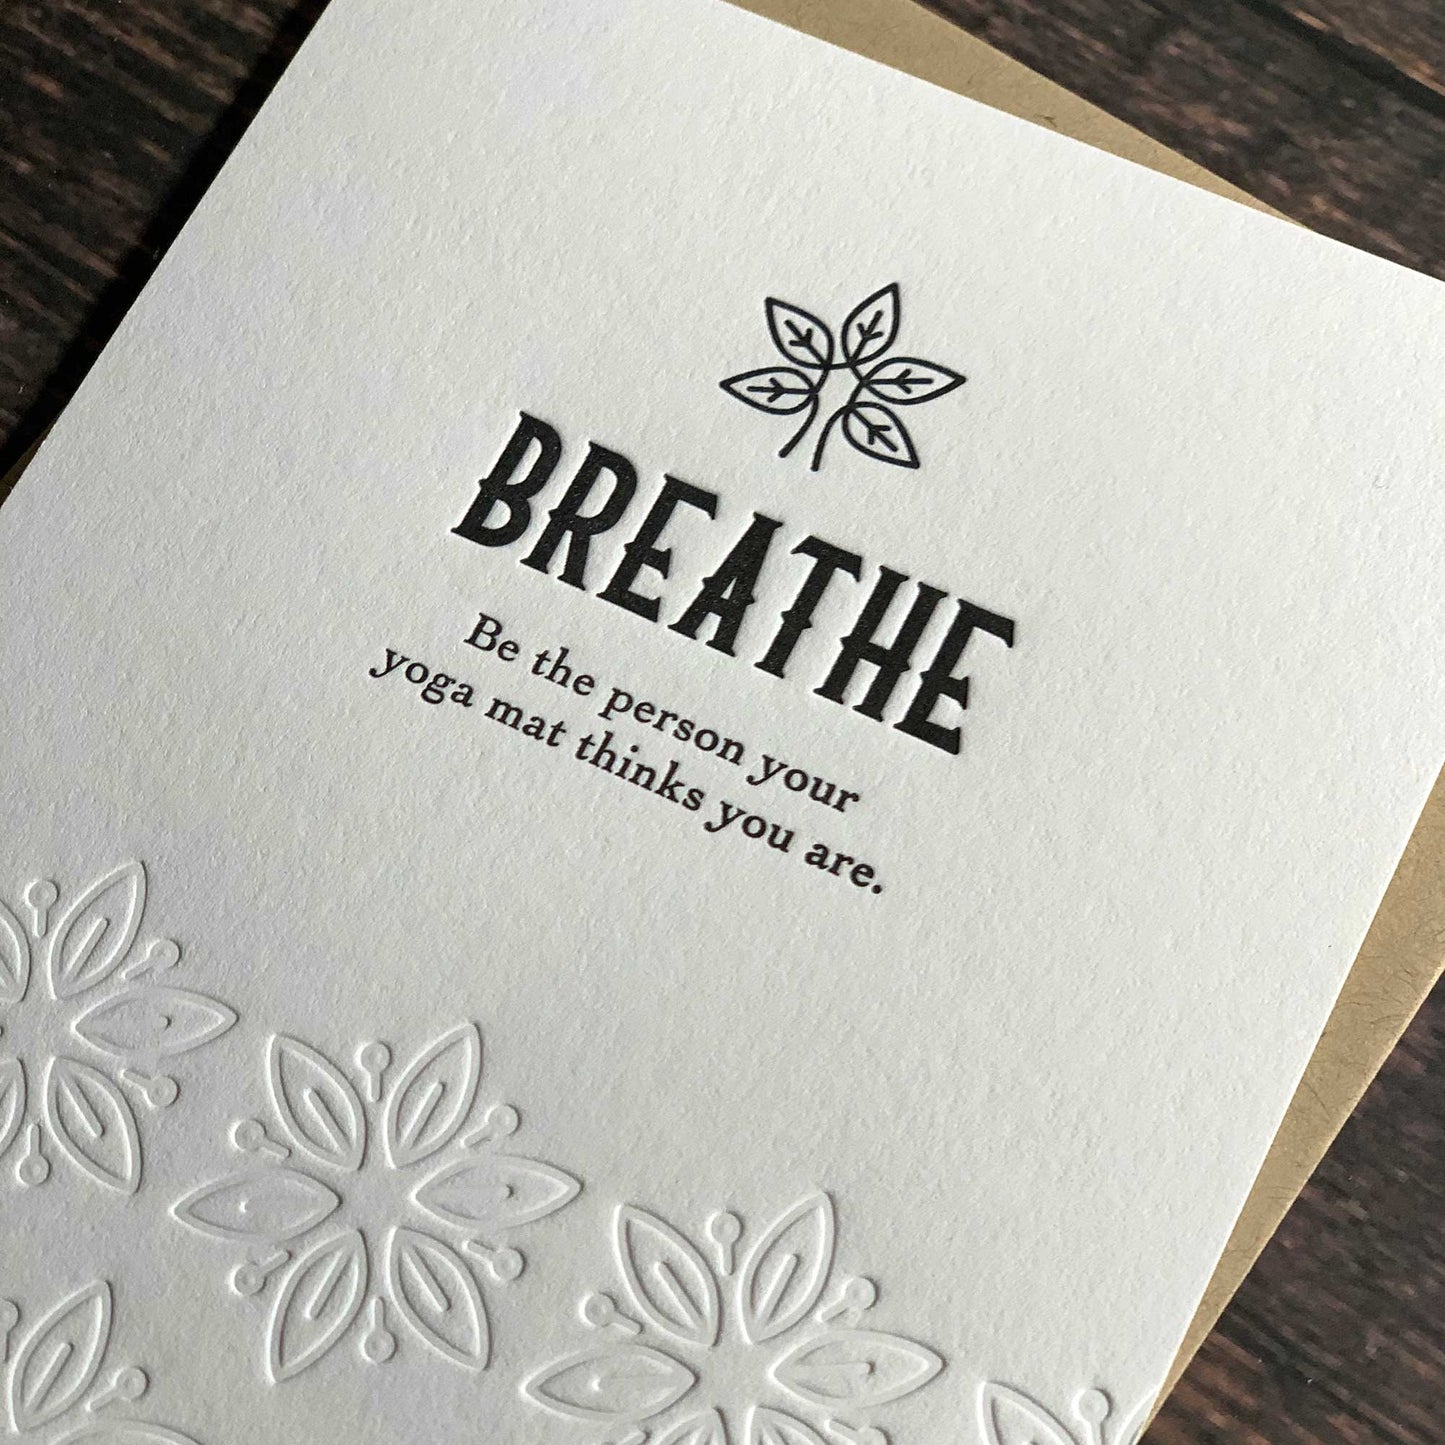 Breathe. Yoga Card. Encouragement Card.